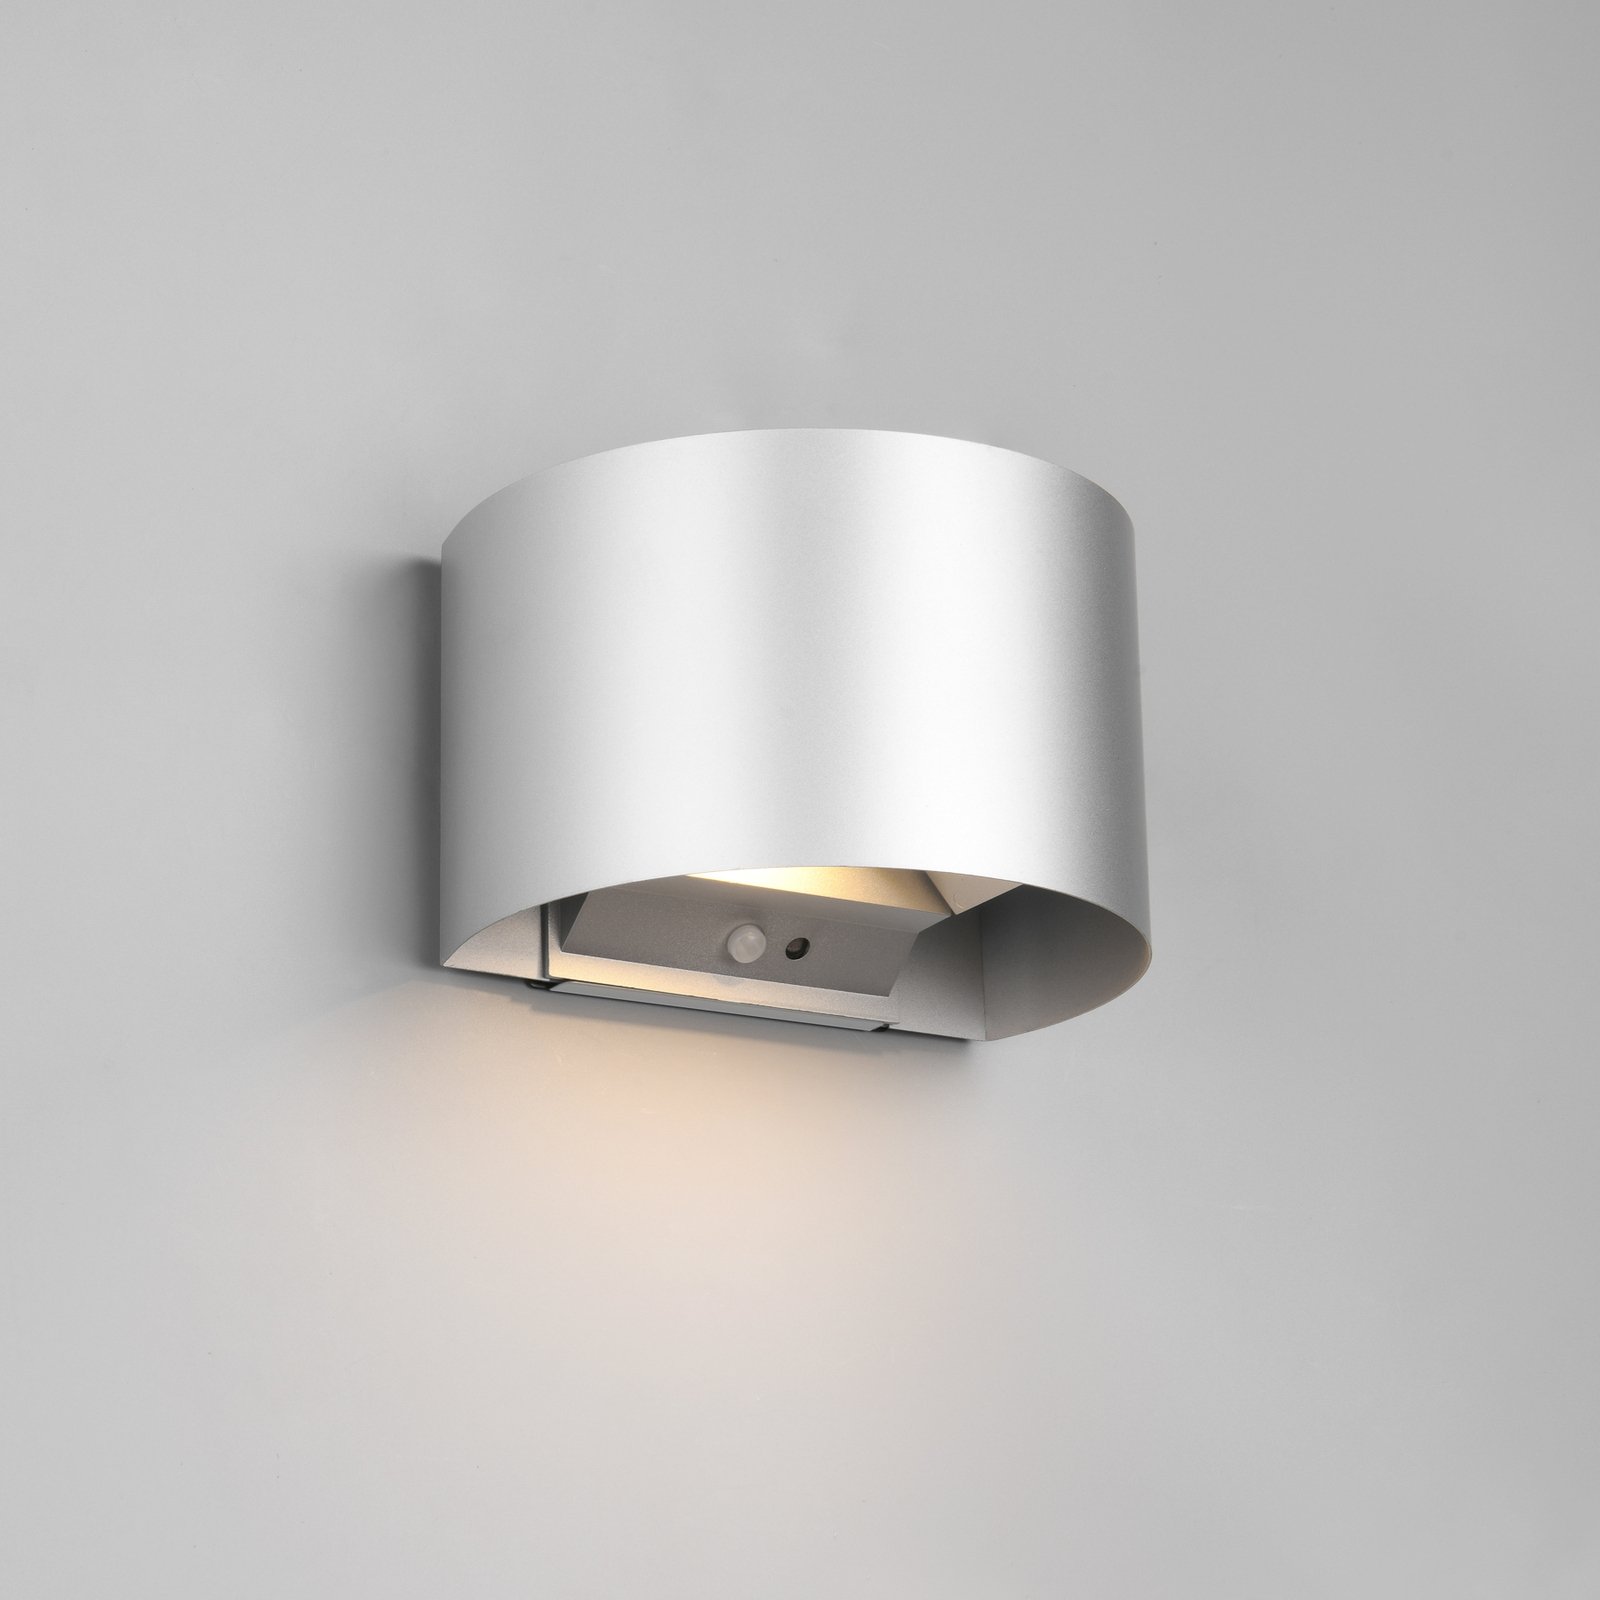 LED outdoor wall lamp Talent, titanium-coloured, width 16 cm